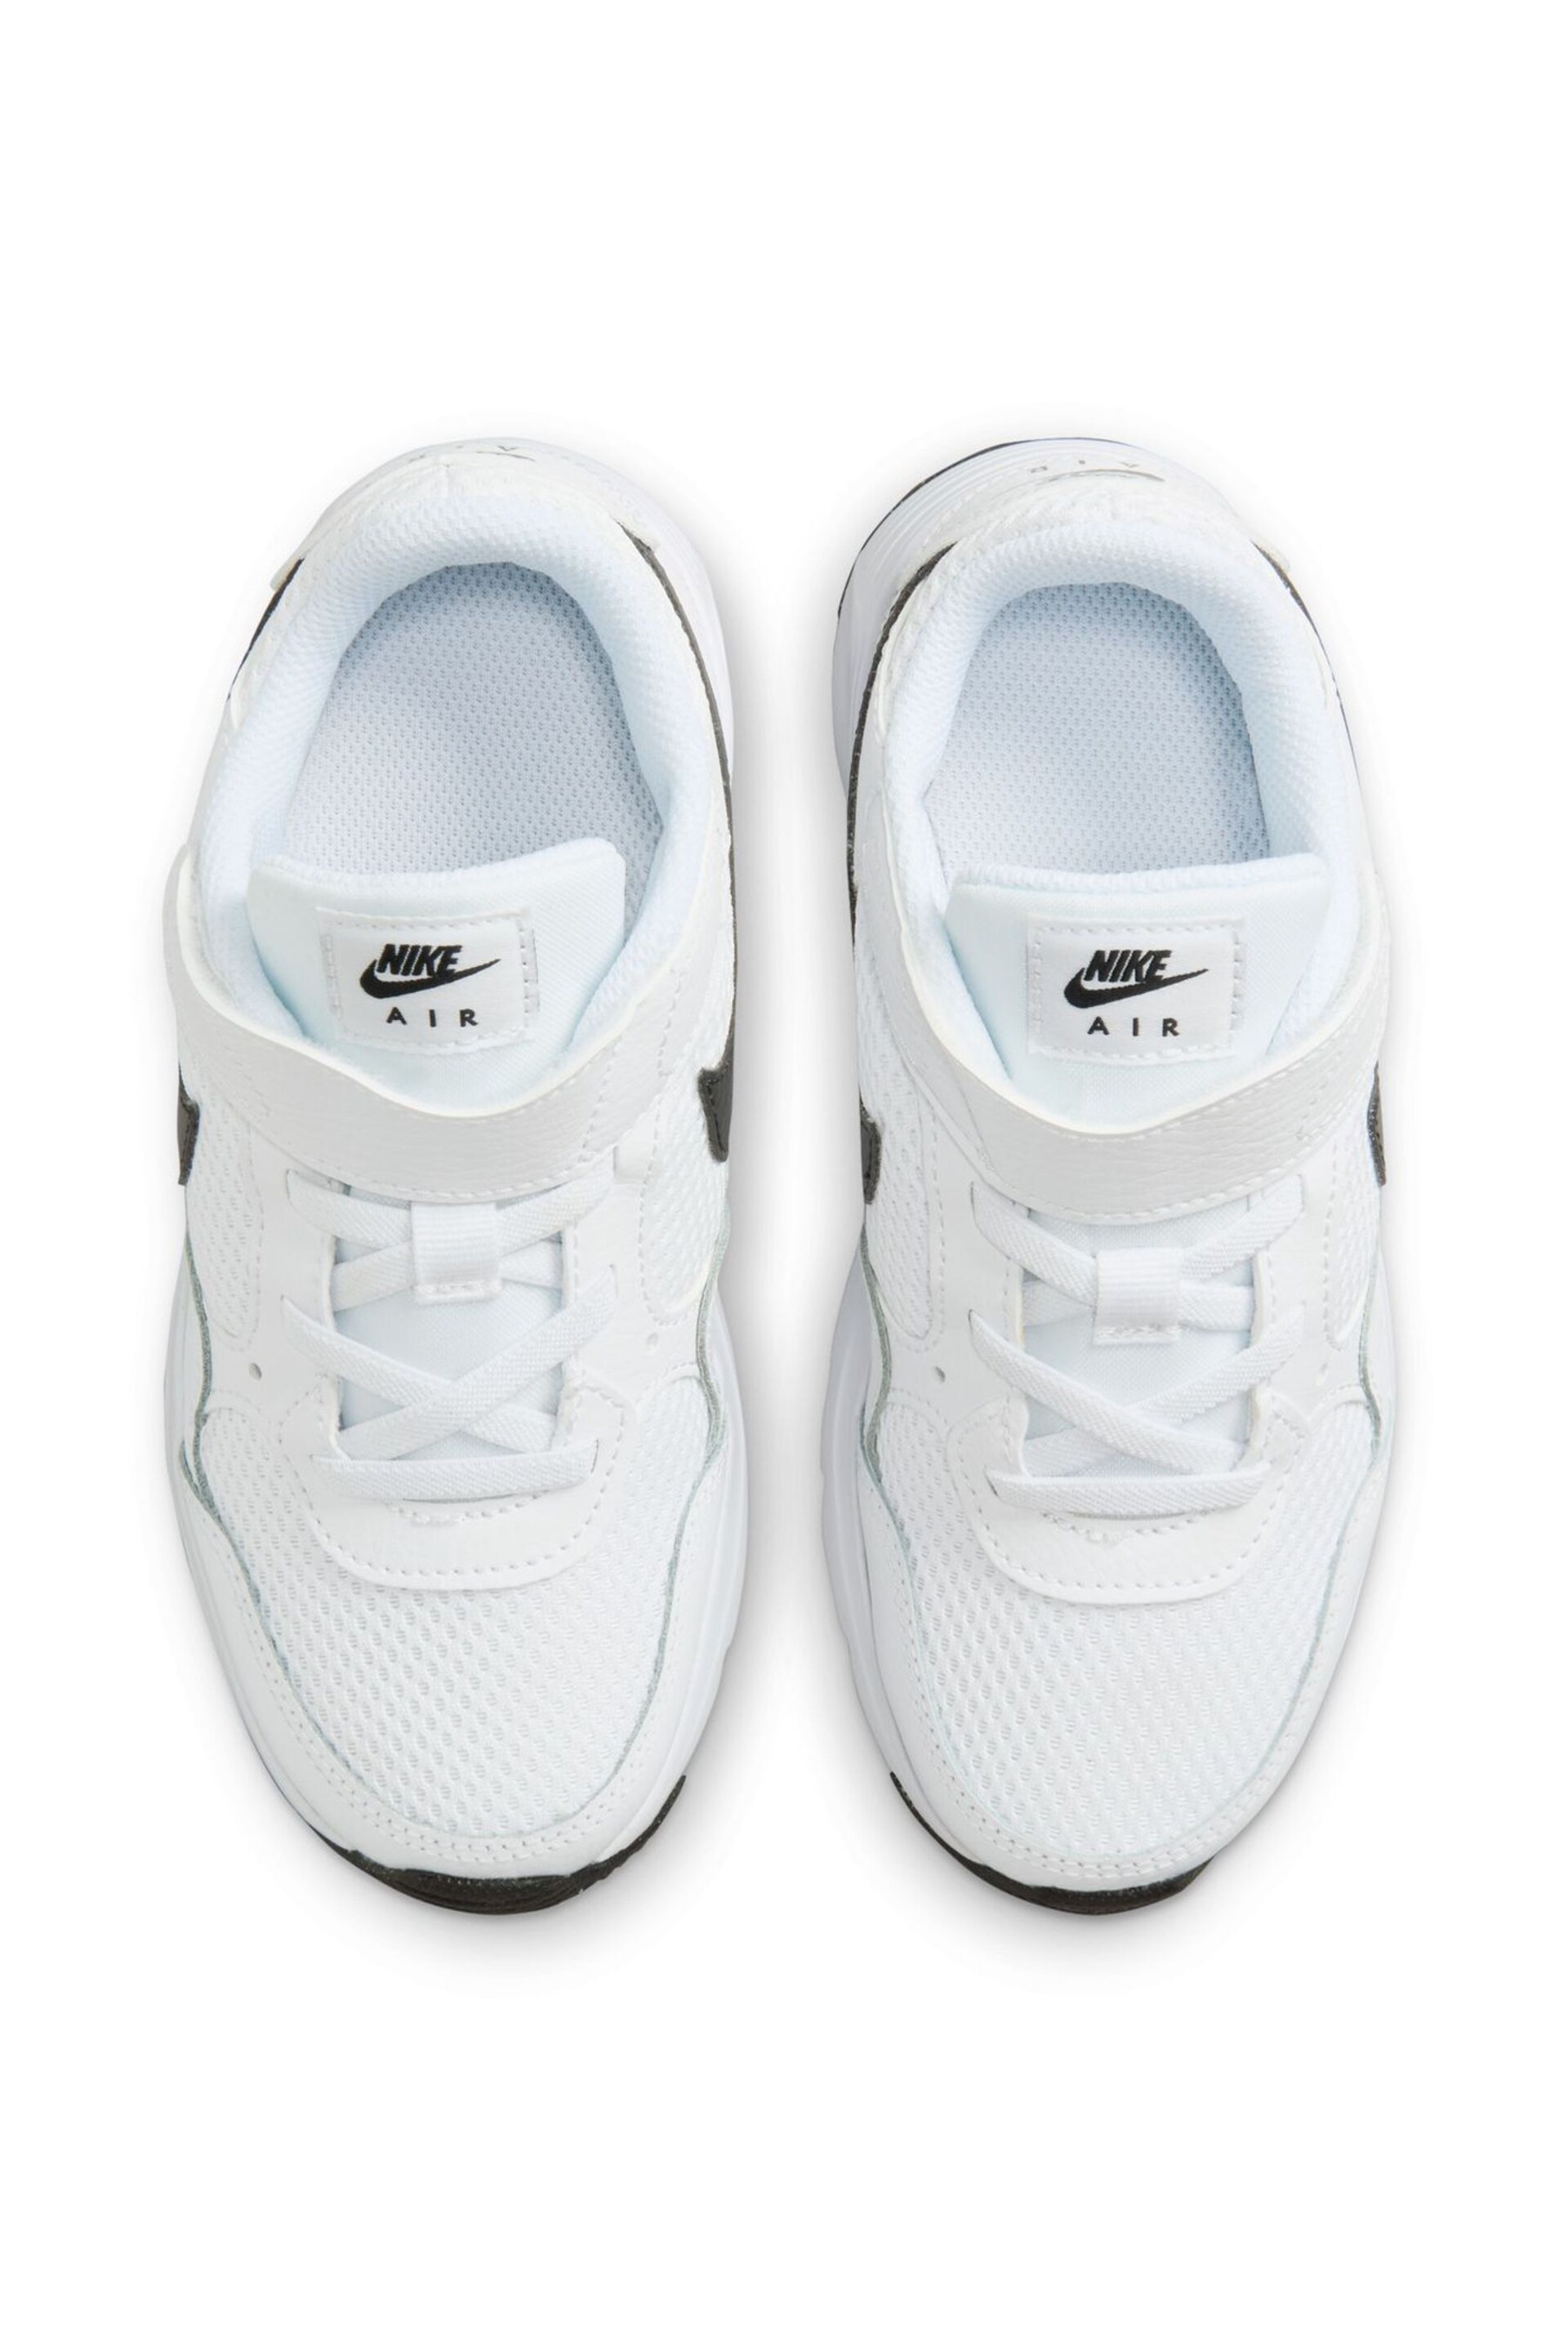 Nike White/Black Junior Air Max SC Trainers - Image 4 of 8